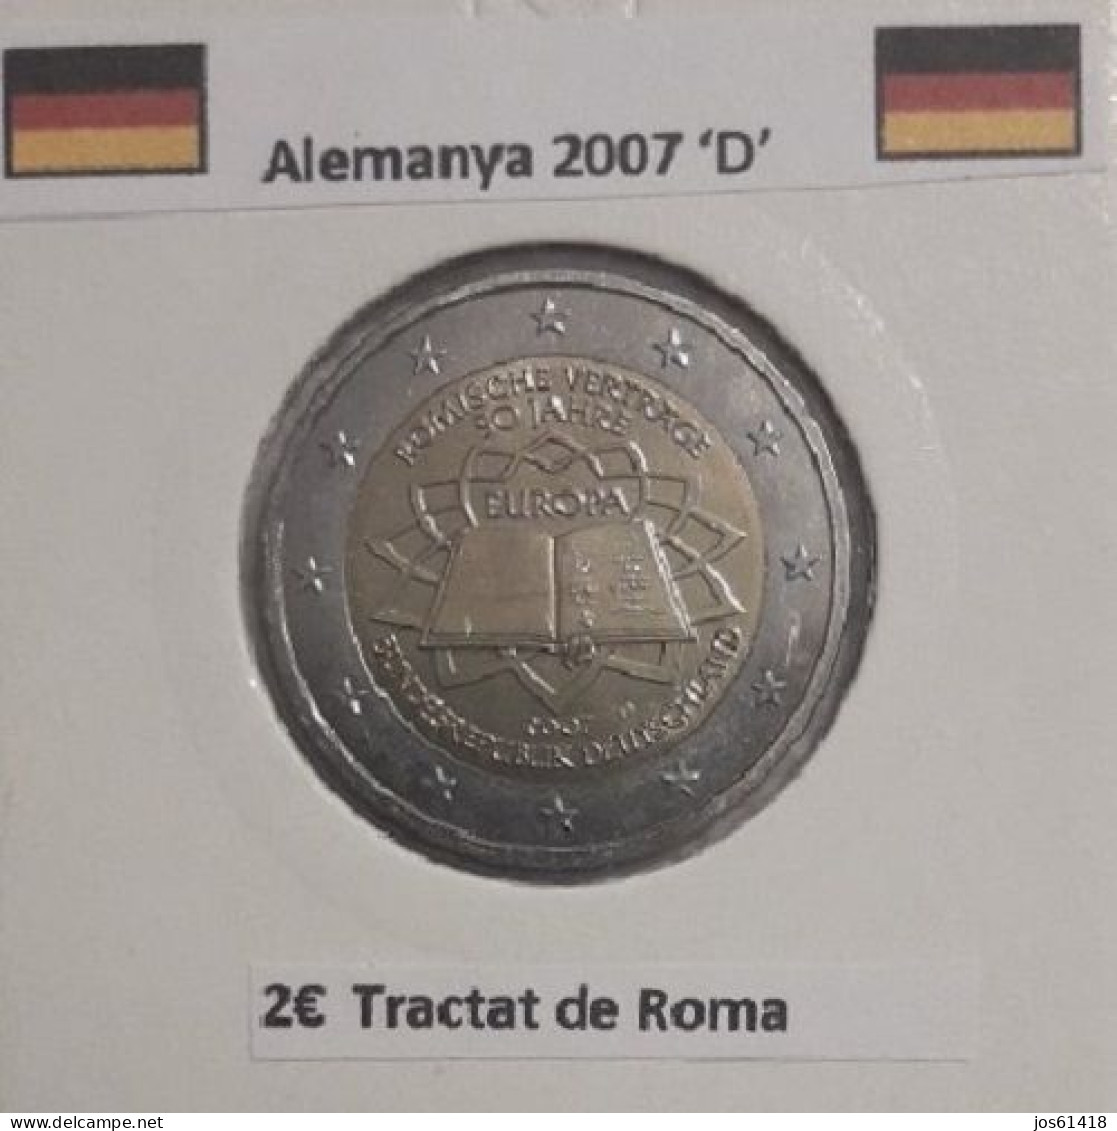 2 Euros Alemania / Germany  2007  50 Jahre Römische Verträge  D Sin Circular - Germany